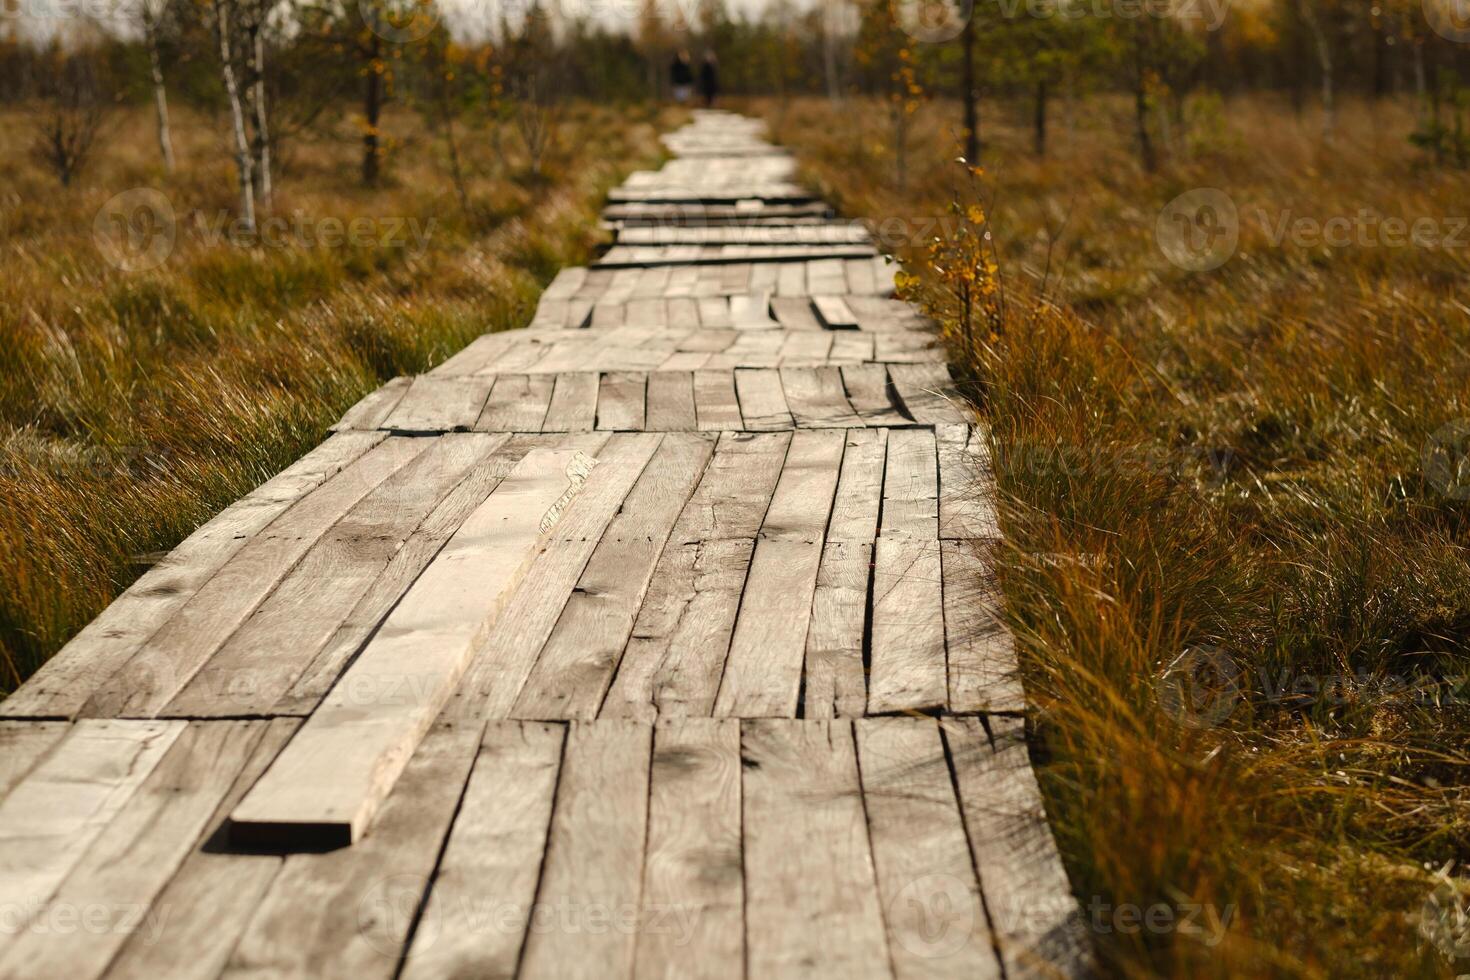 Wooden path on the swamp in Yelnya, Belarus photo